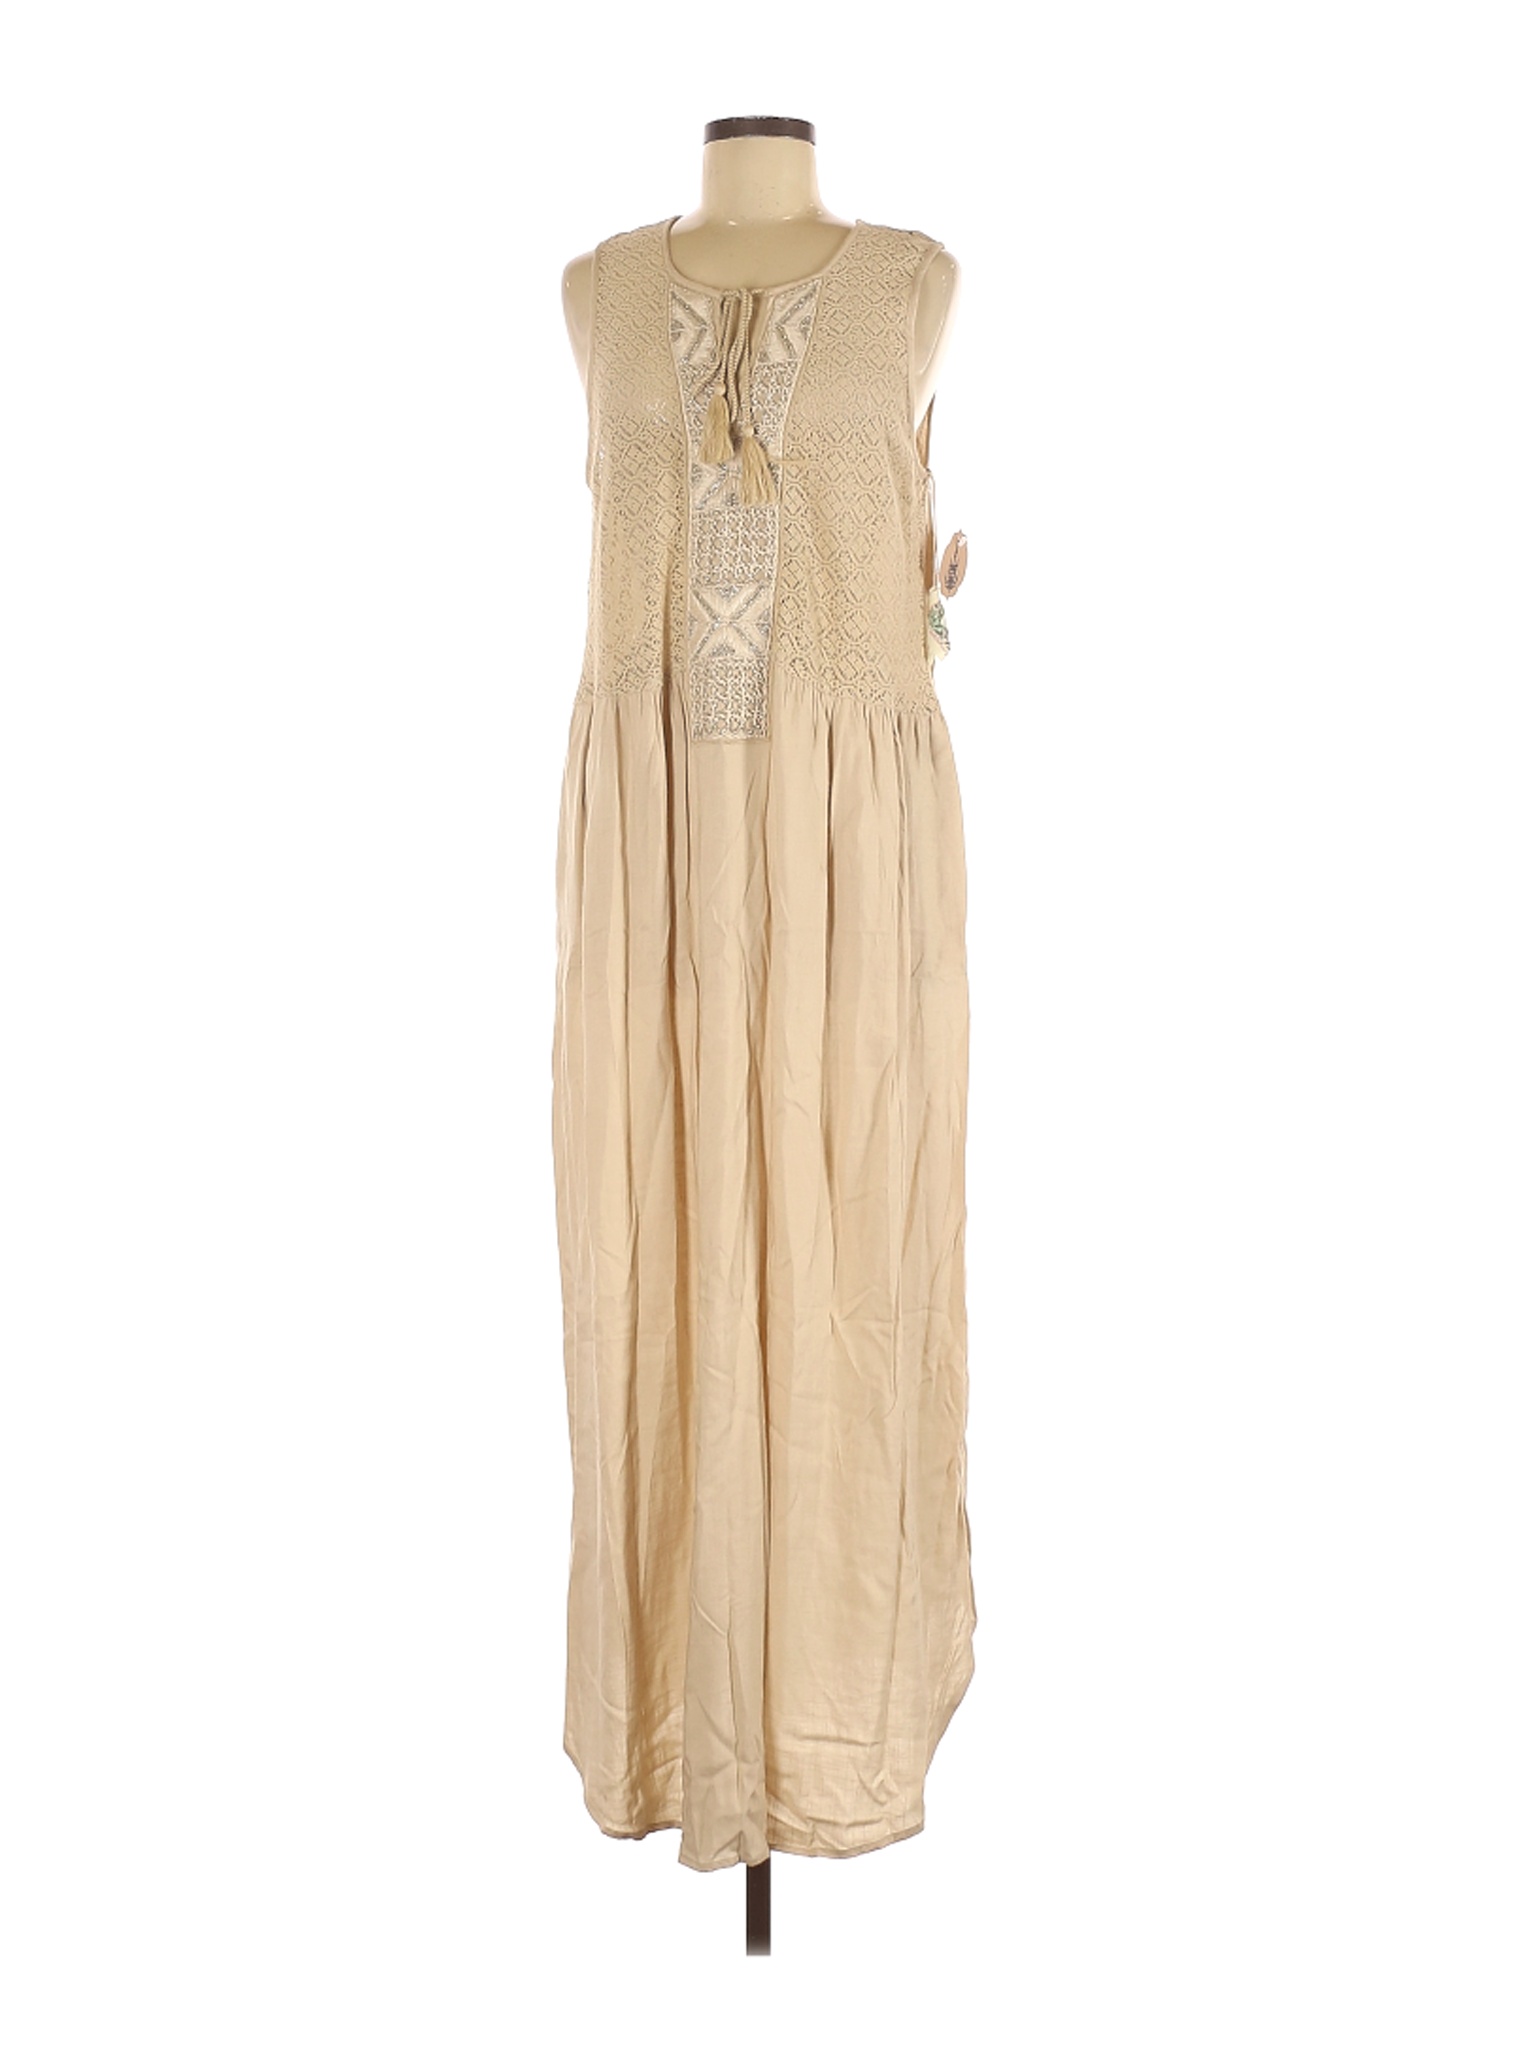 NWT Aratta Silent Journey Women Brown Casual Dress M | eBay